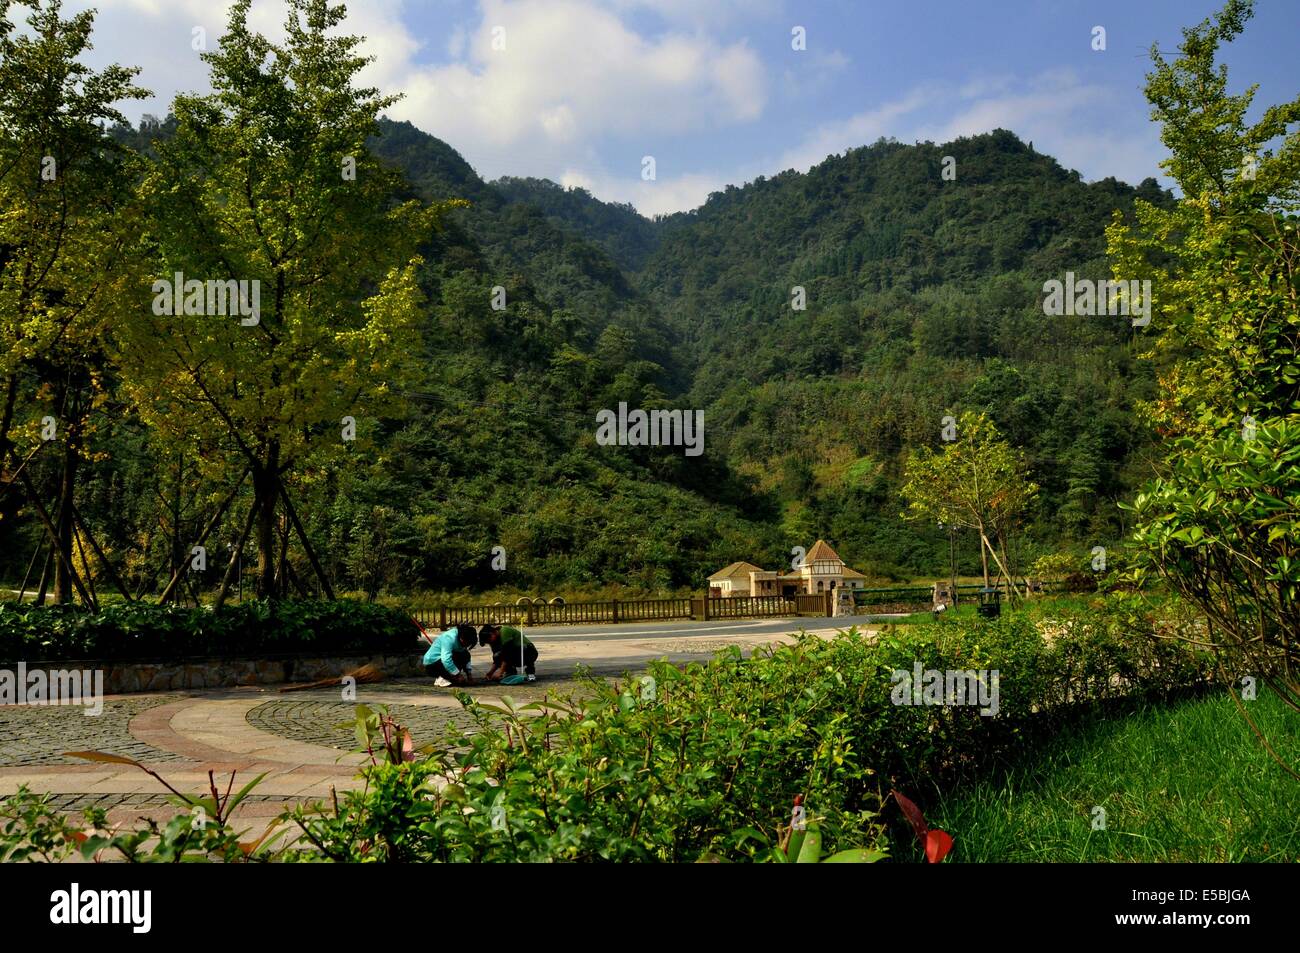 BAI LU TOWN, CHINA:  View from the promenade to the verdant green mountainsides surrounding the town of Bai Lu Stock Photo